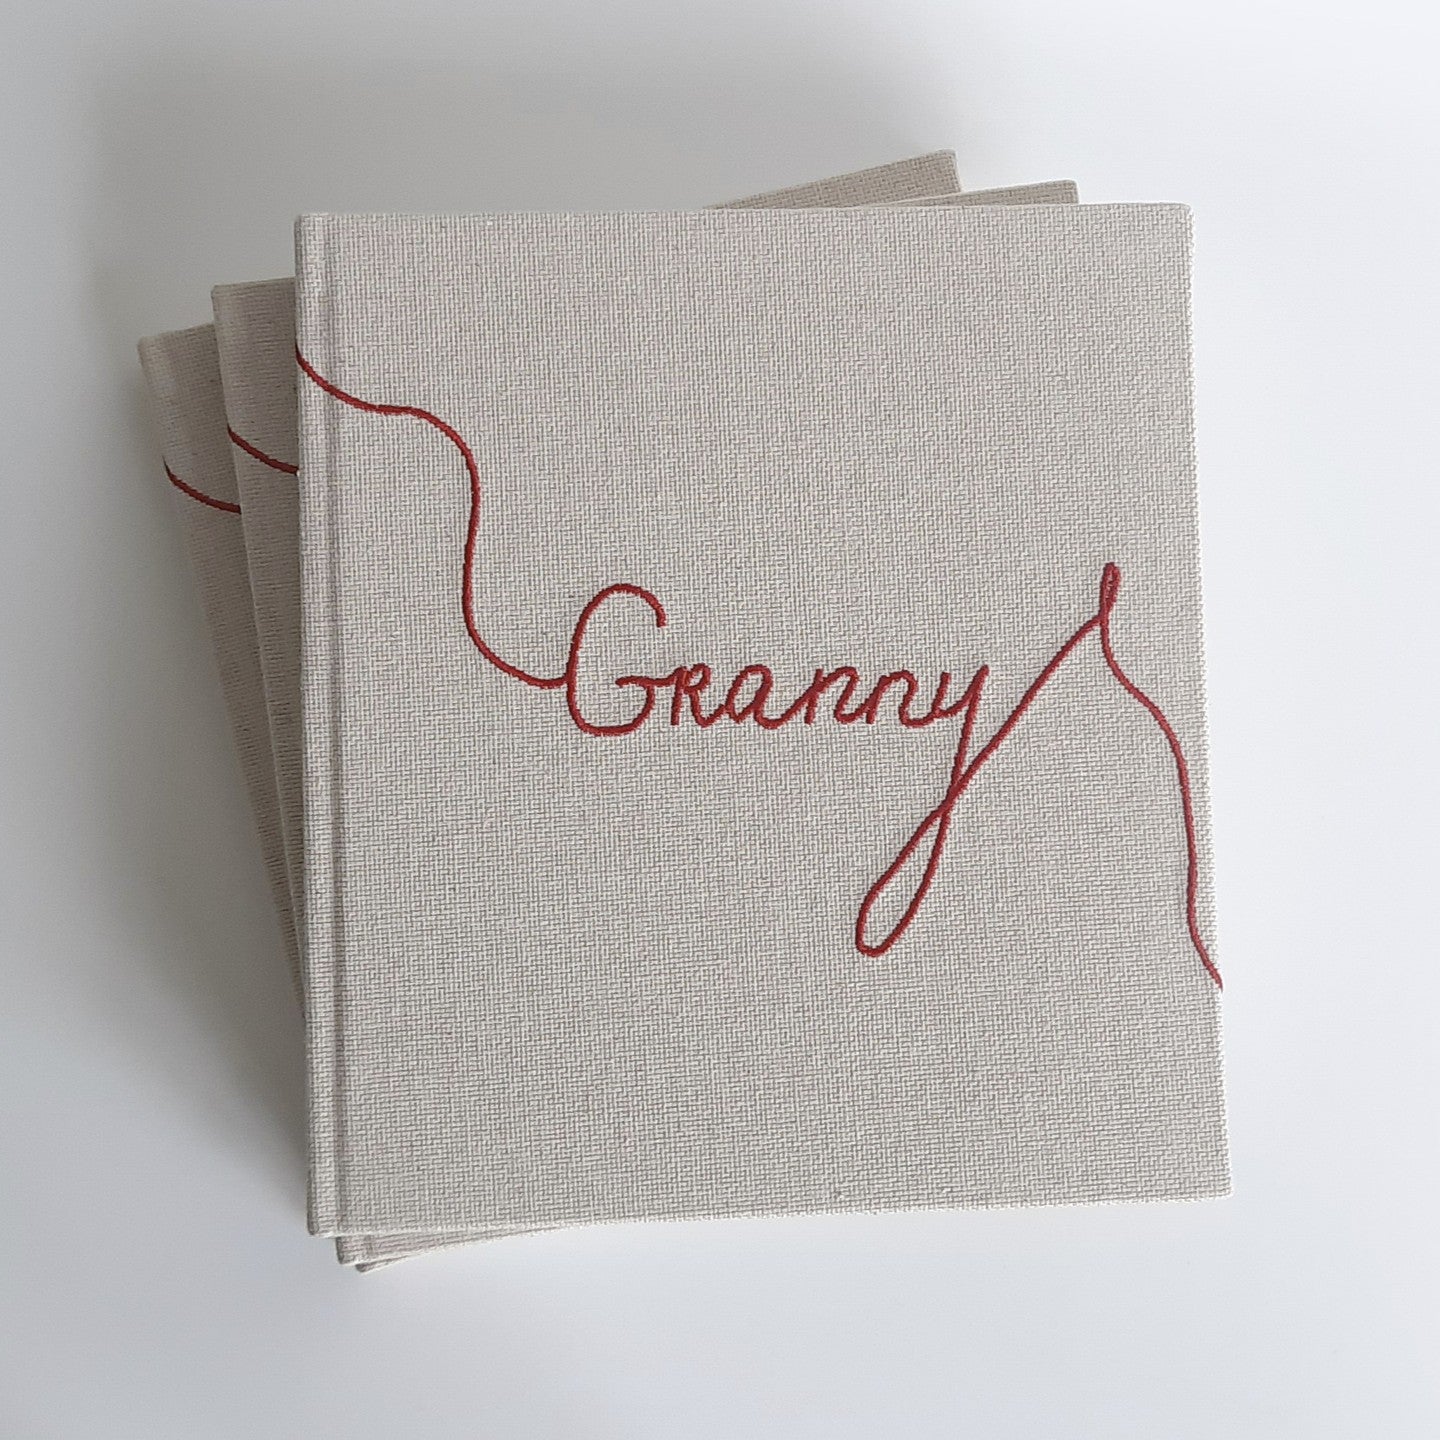 Redzet Editions Has Released Granny, a Book by Ukrainian Artist Olena Morozova